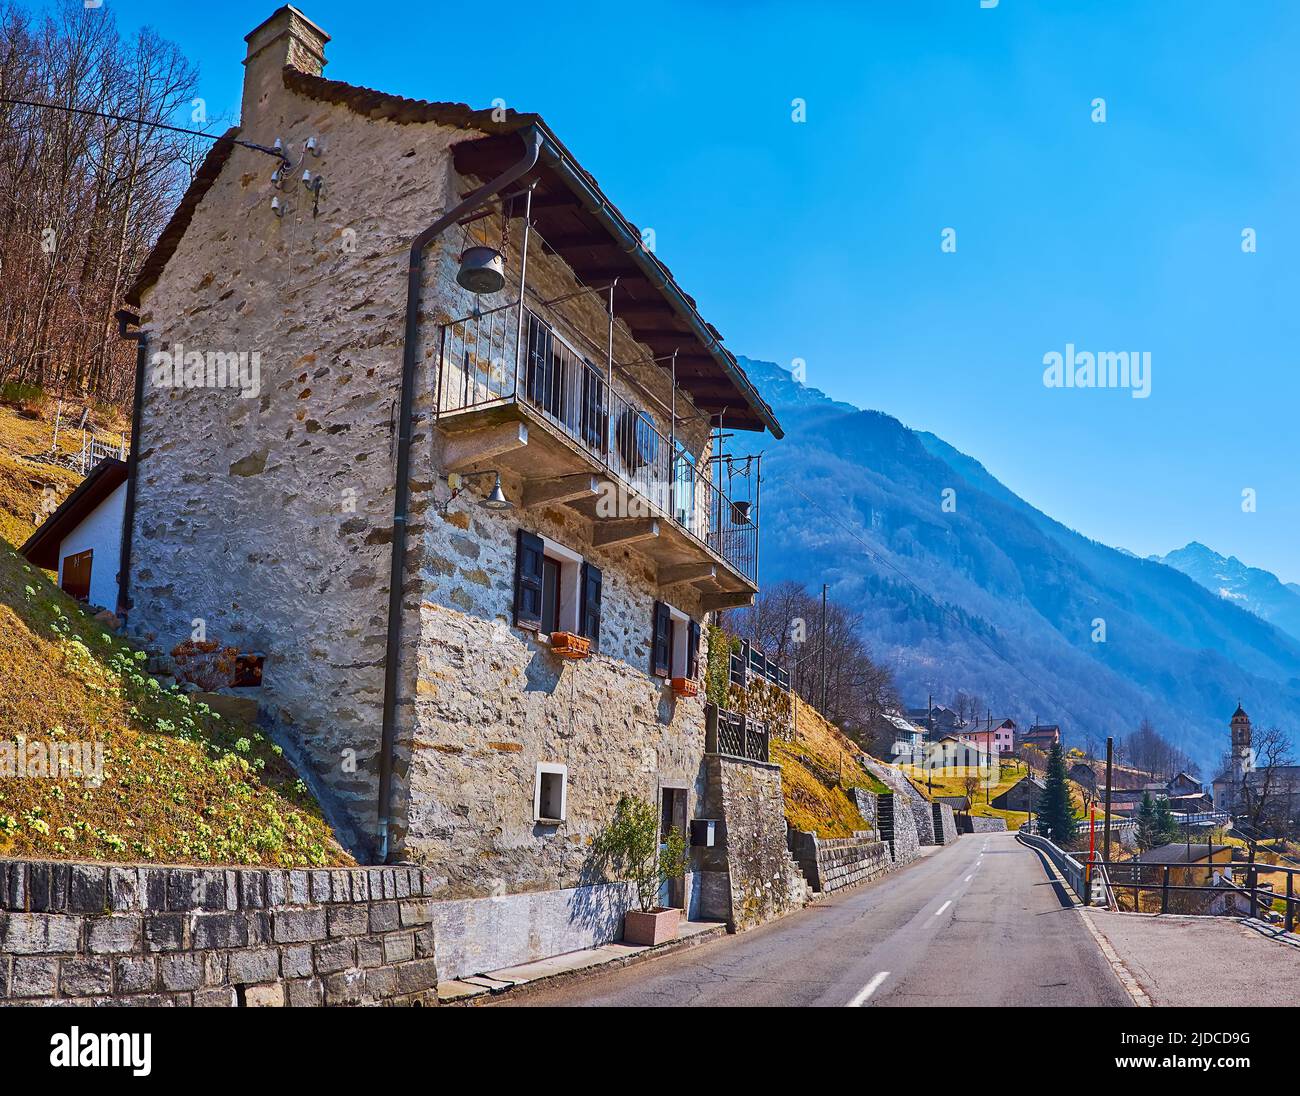 The intercity road runs through the village of Frasco, located in Valle Verzasca, Switzerland Stock Photo